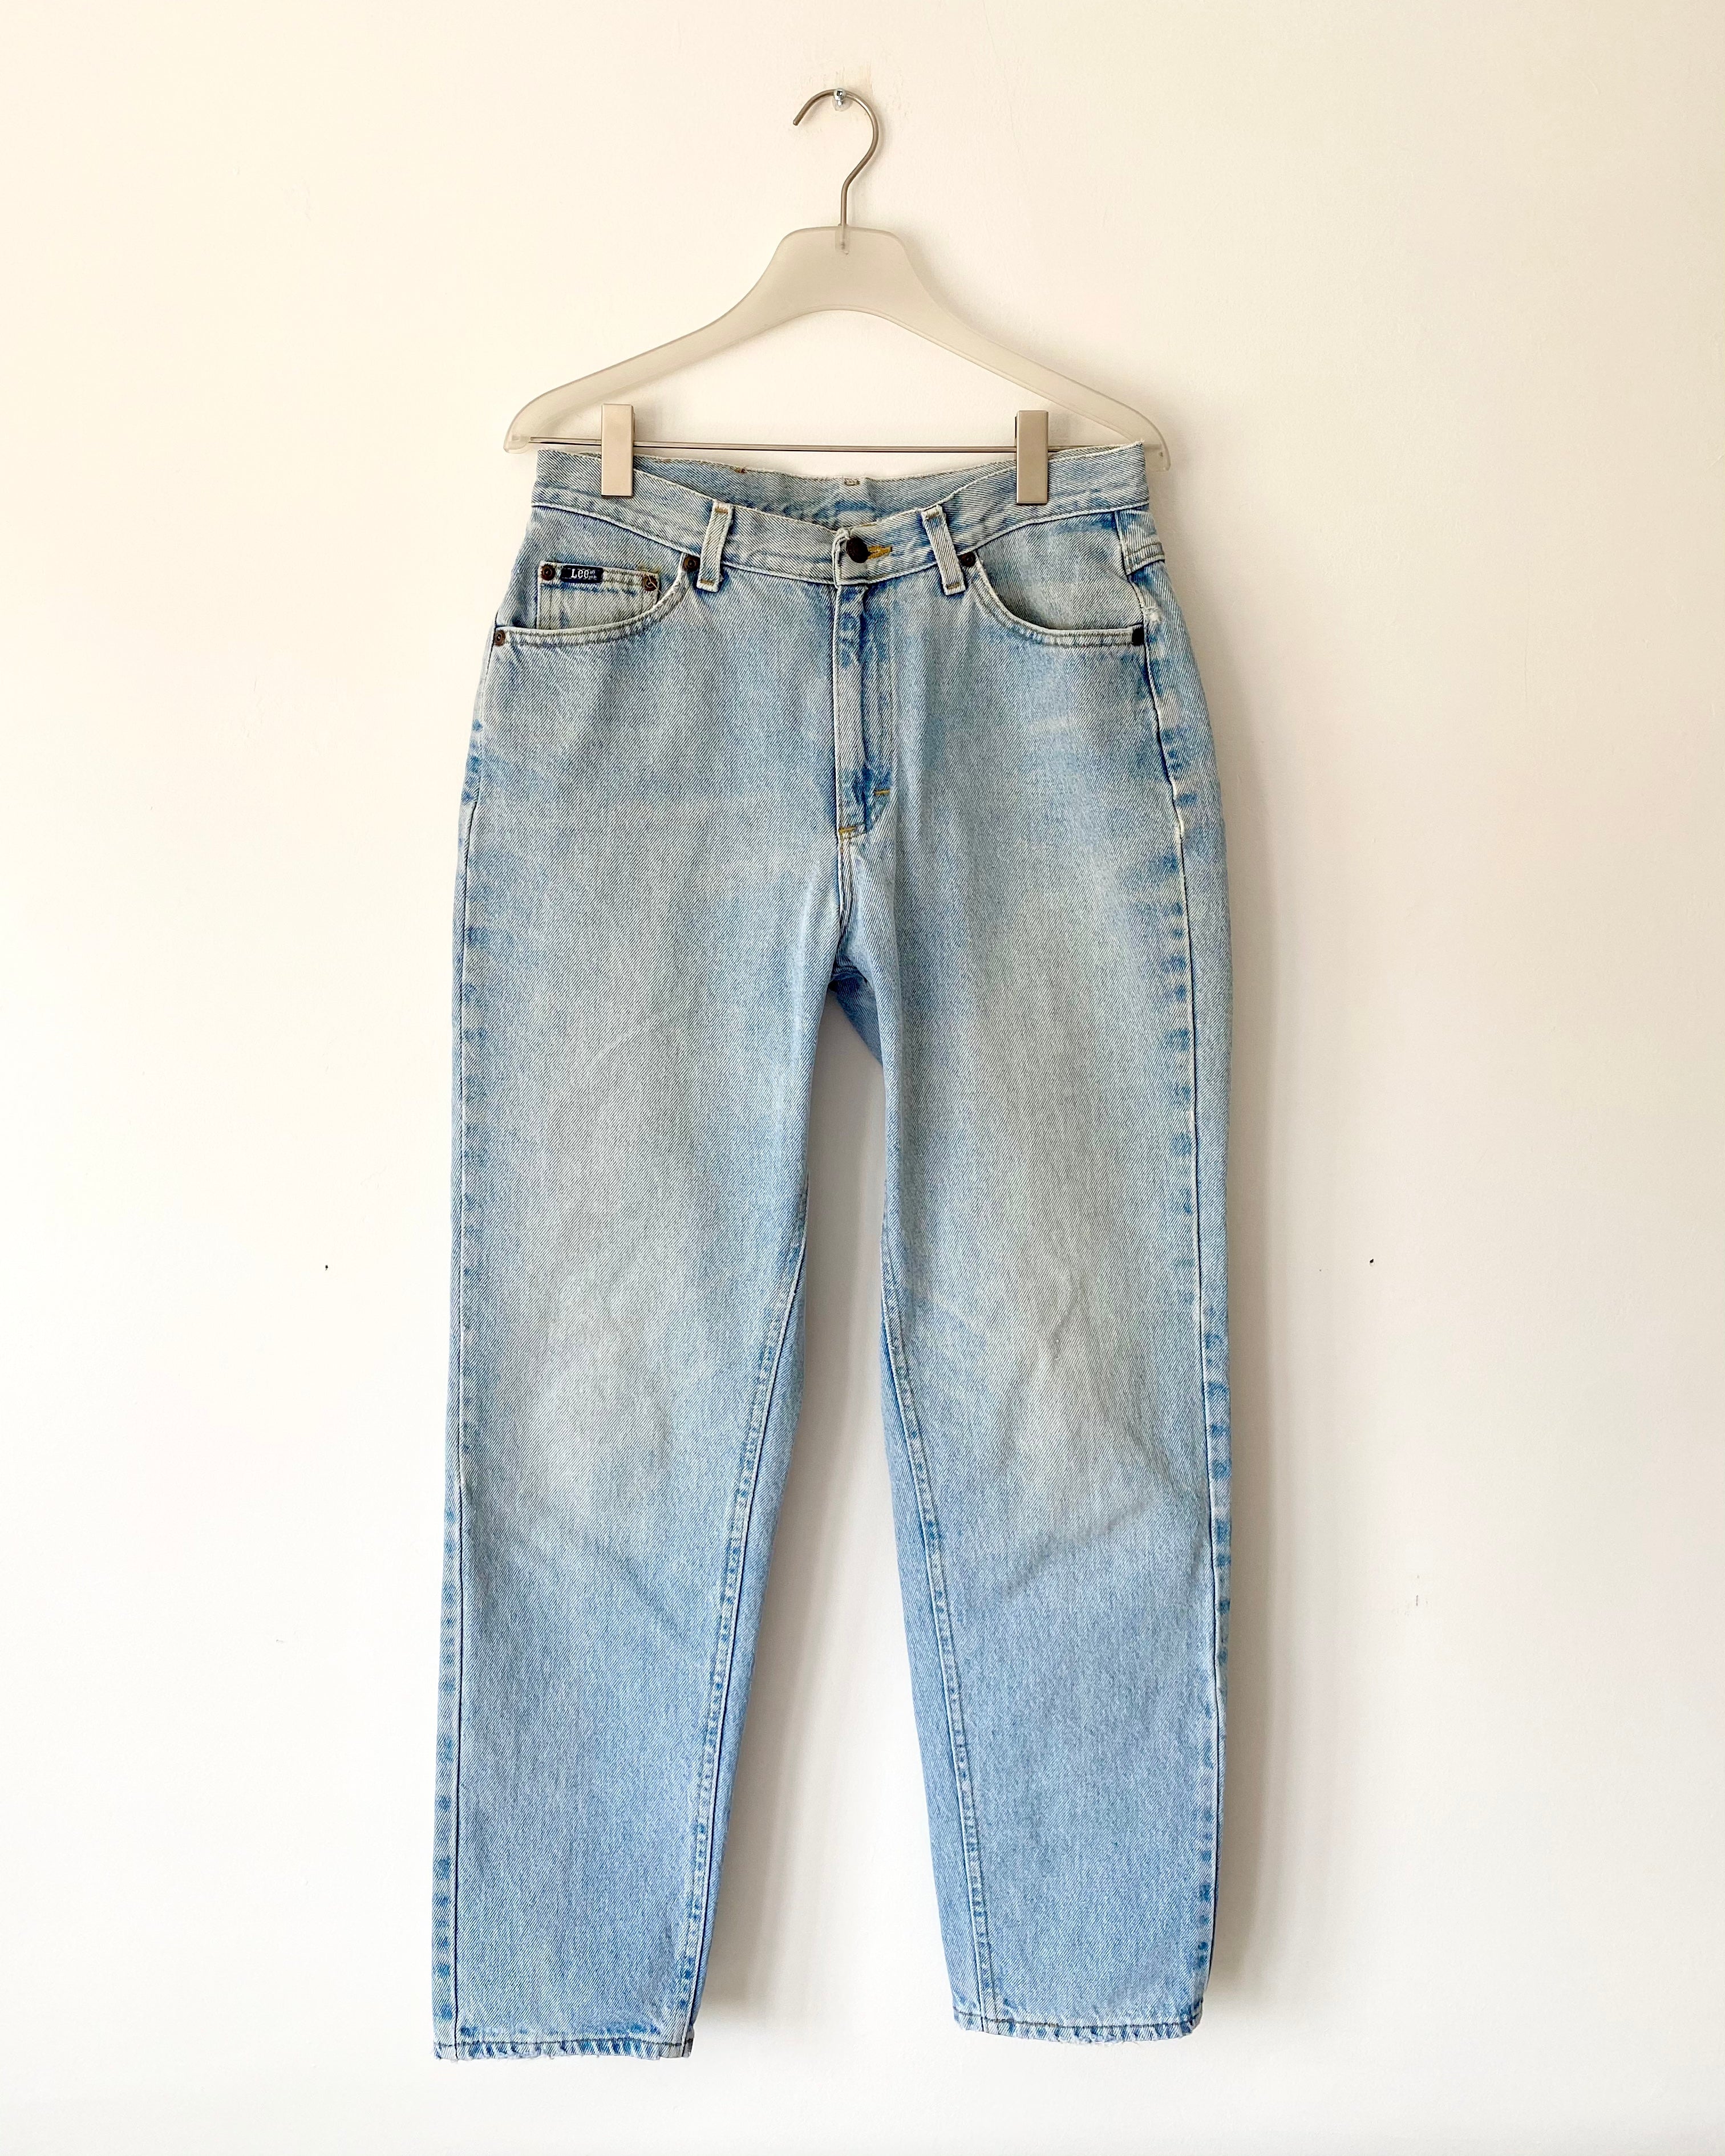 Vintage LEEs Made in USA Light Wash Jeans size 32